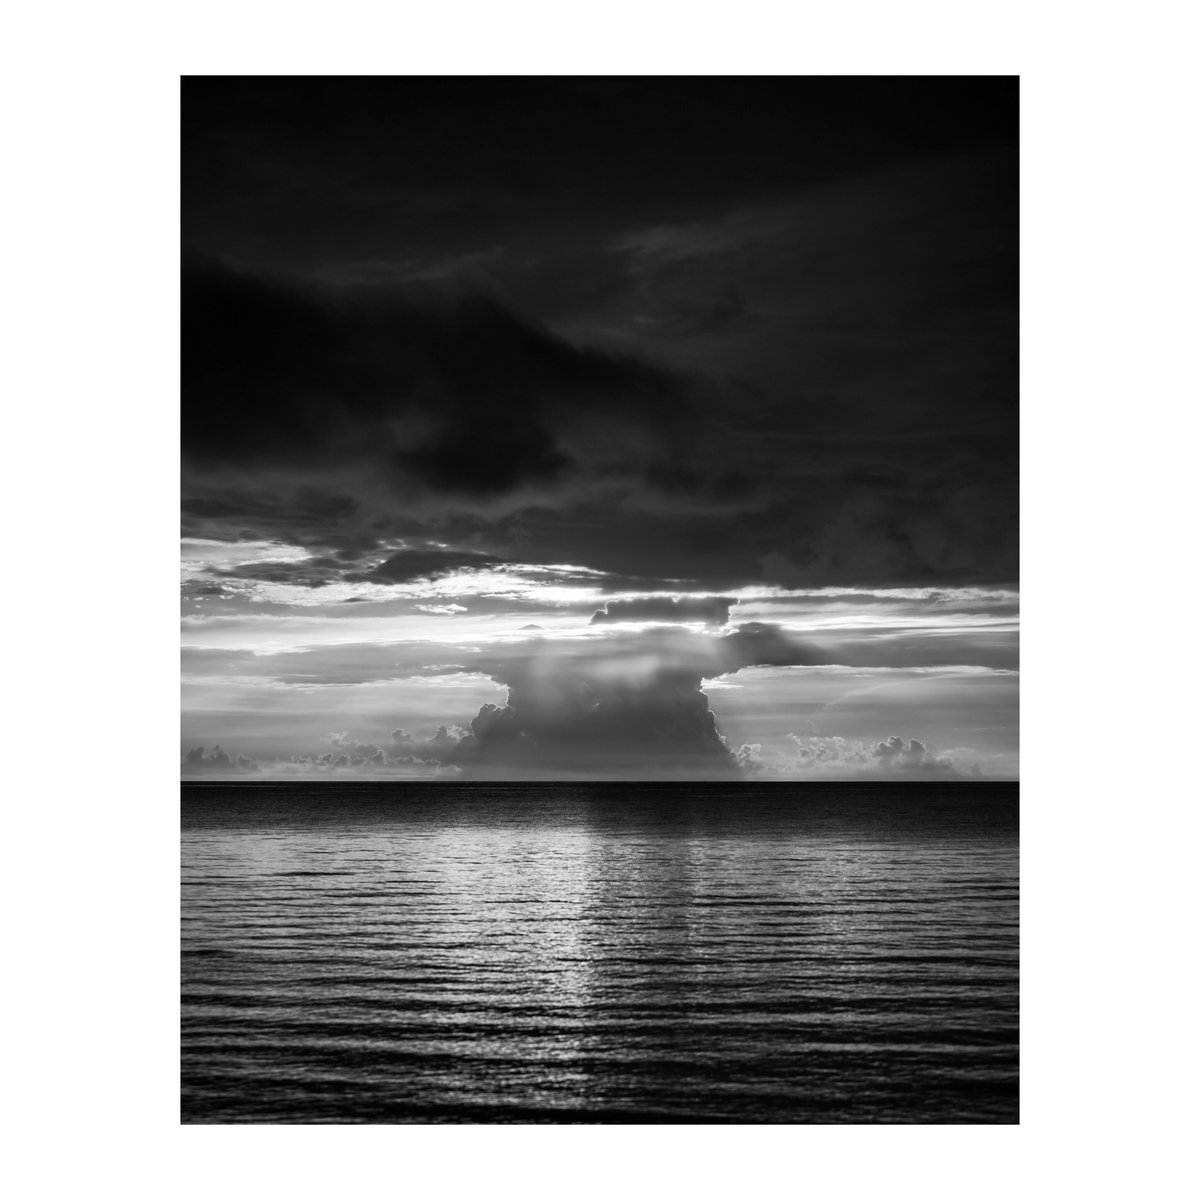 Atmospheric 

@bnwmasters 

#landscape #blackandwhitephoto #monochrome #lawrencegriffin #bnwphotography #seascape